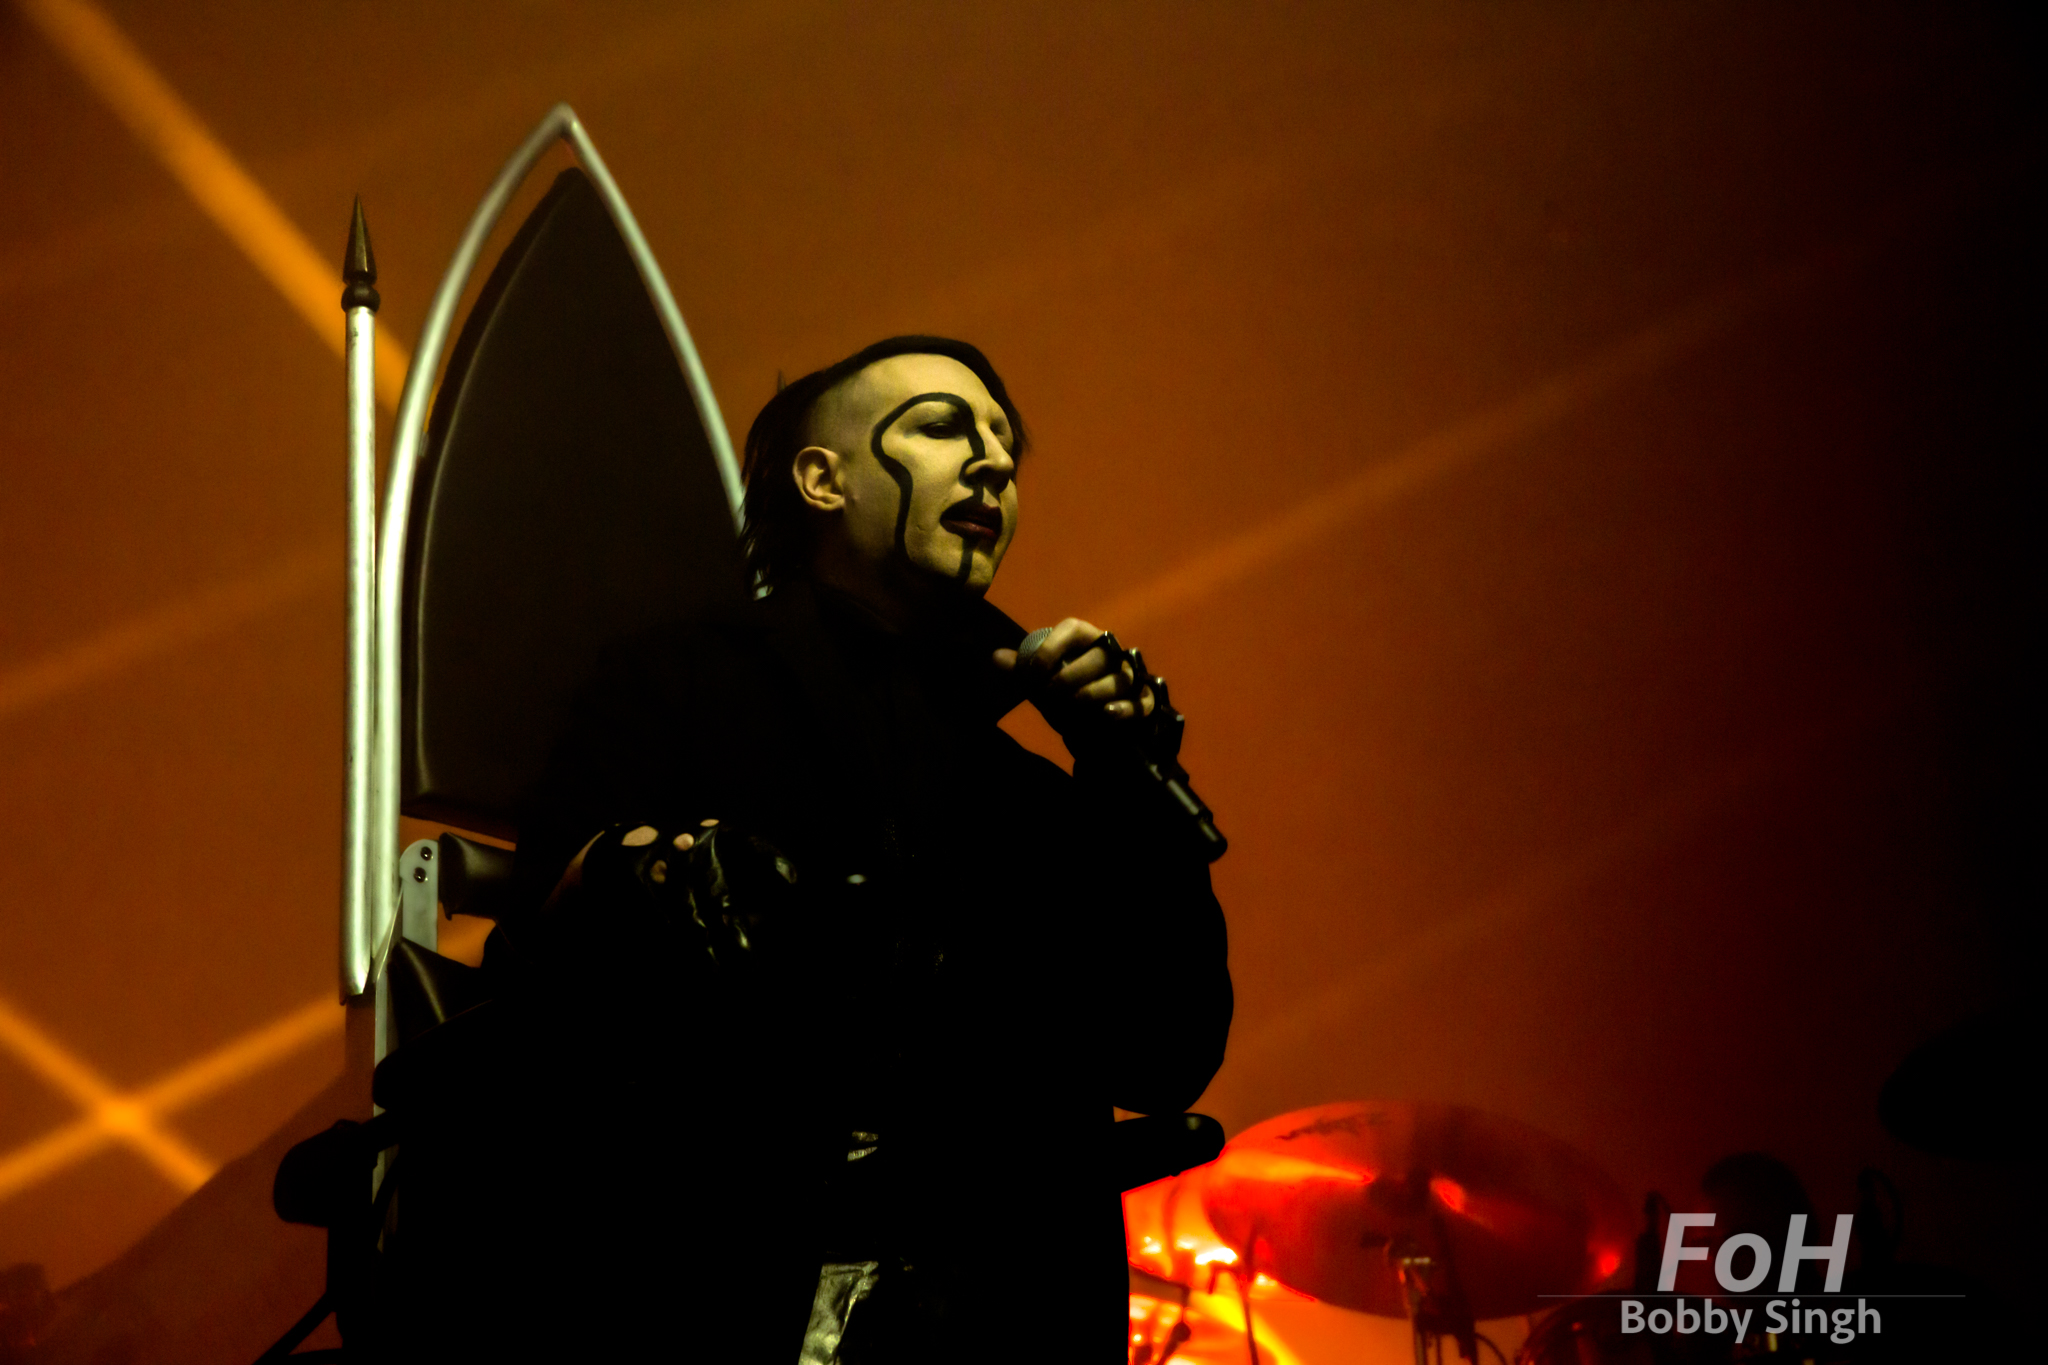  Toronto, CANADA. Marilyn Marilyn Manson performs on the "Heaven Upside Down" Tour at Rebel Nightclub. Bobby Singh 